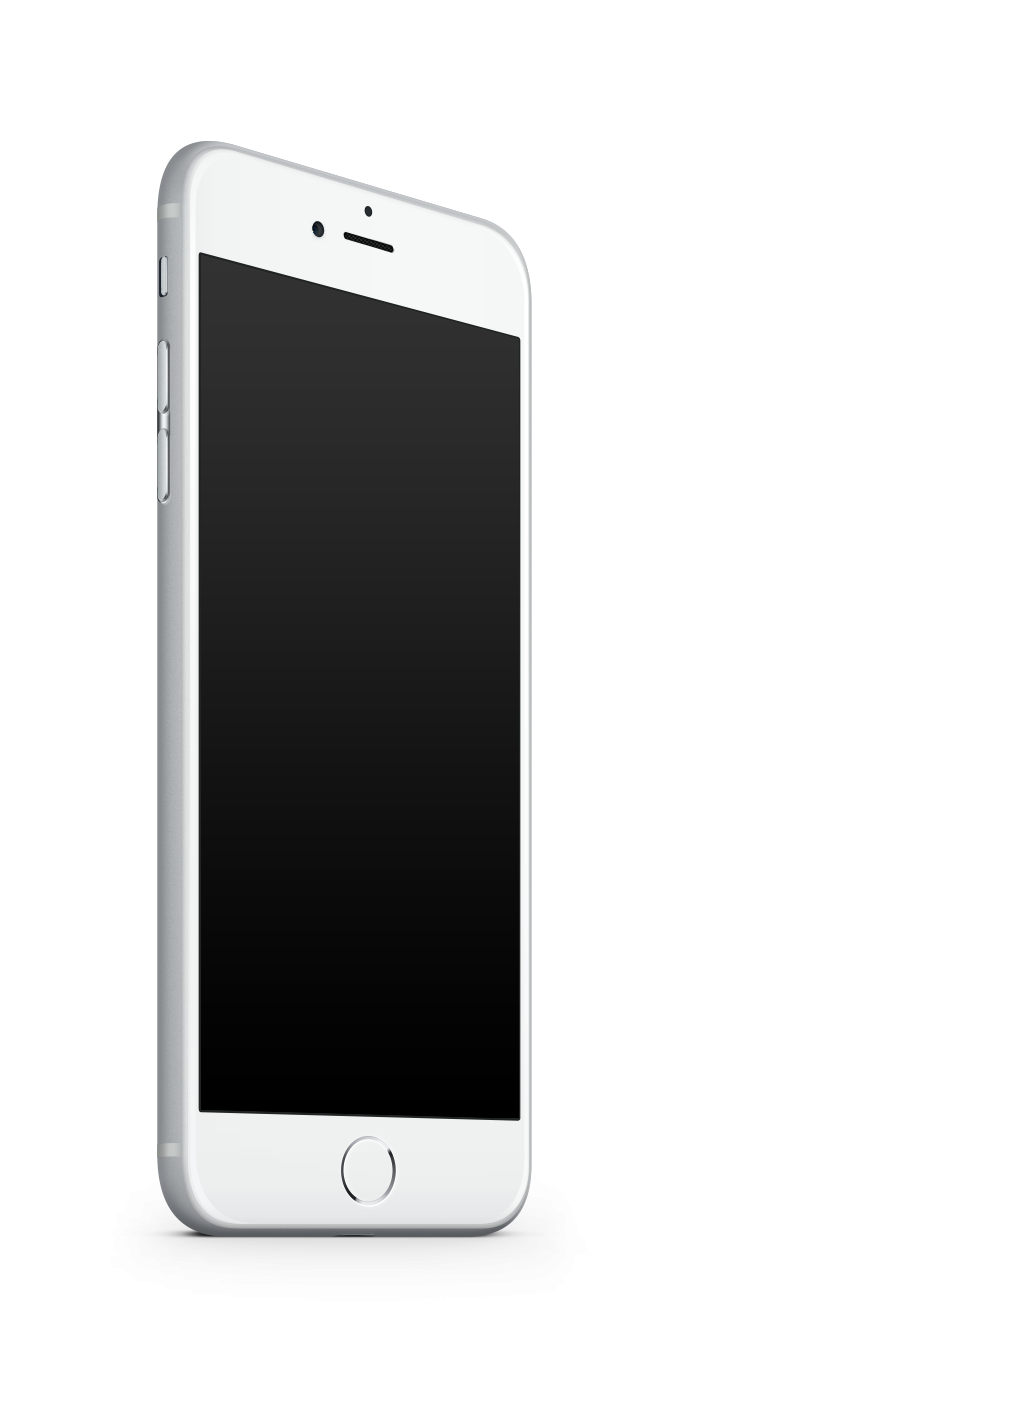 Apple iPhone 7 Plus PNG in Transparent